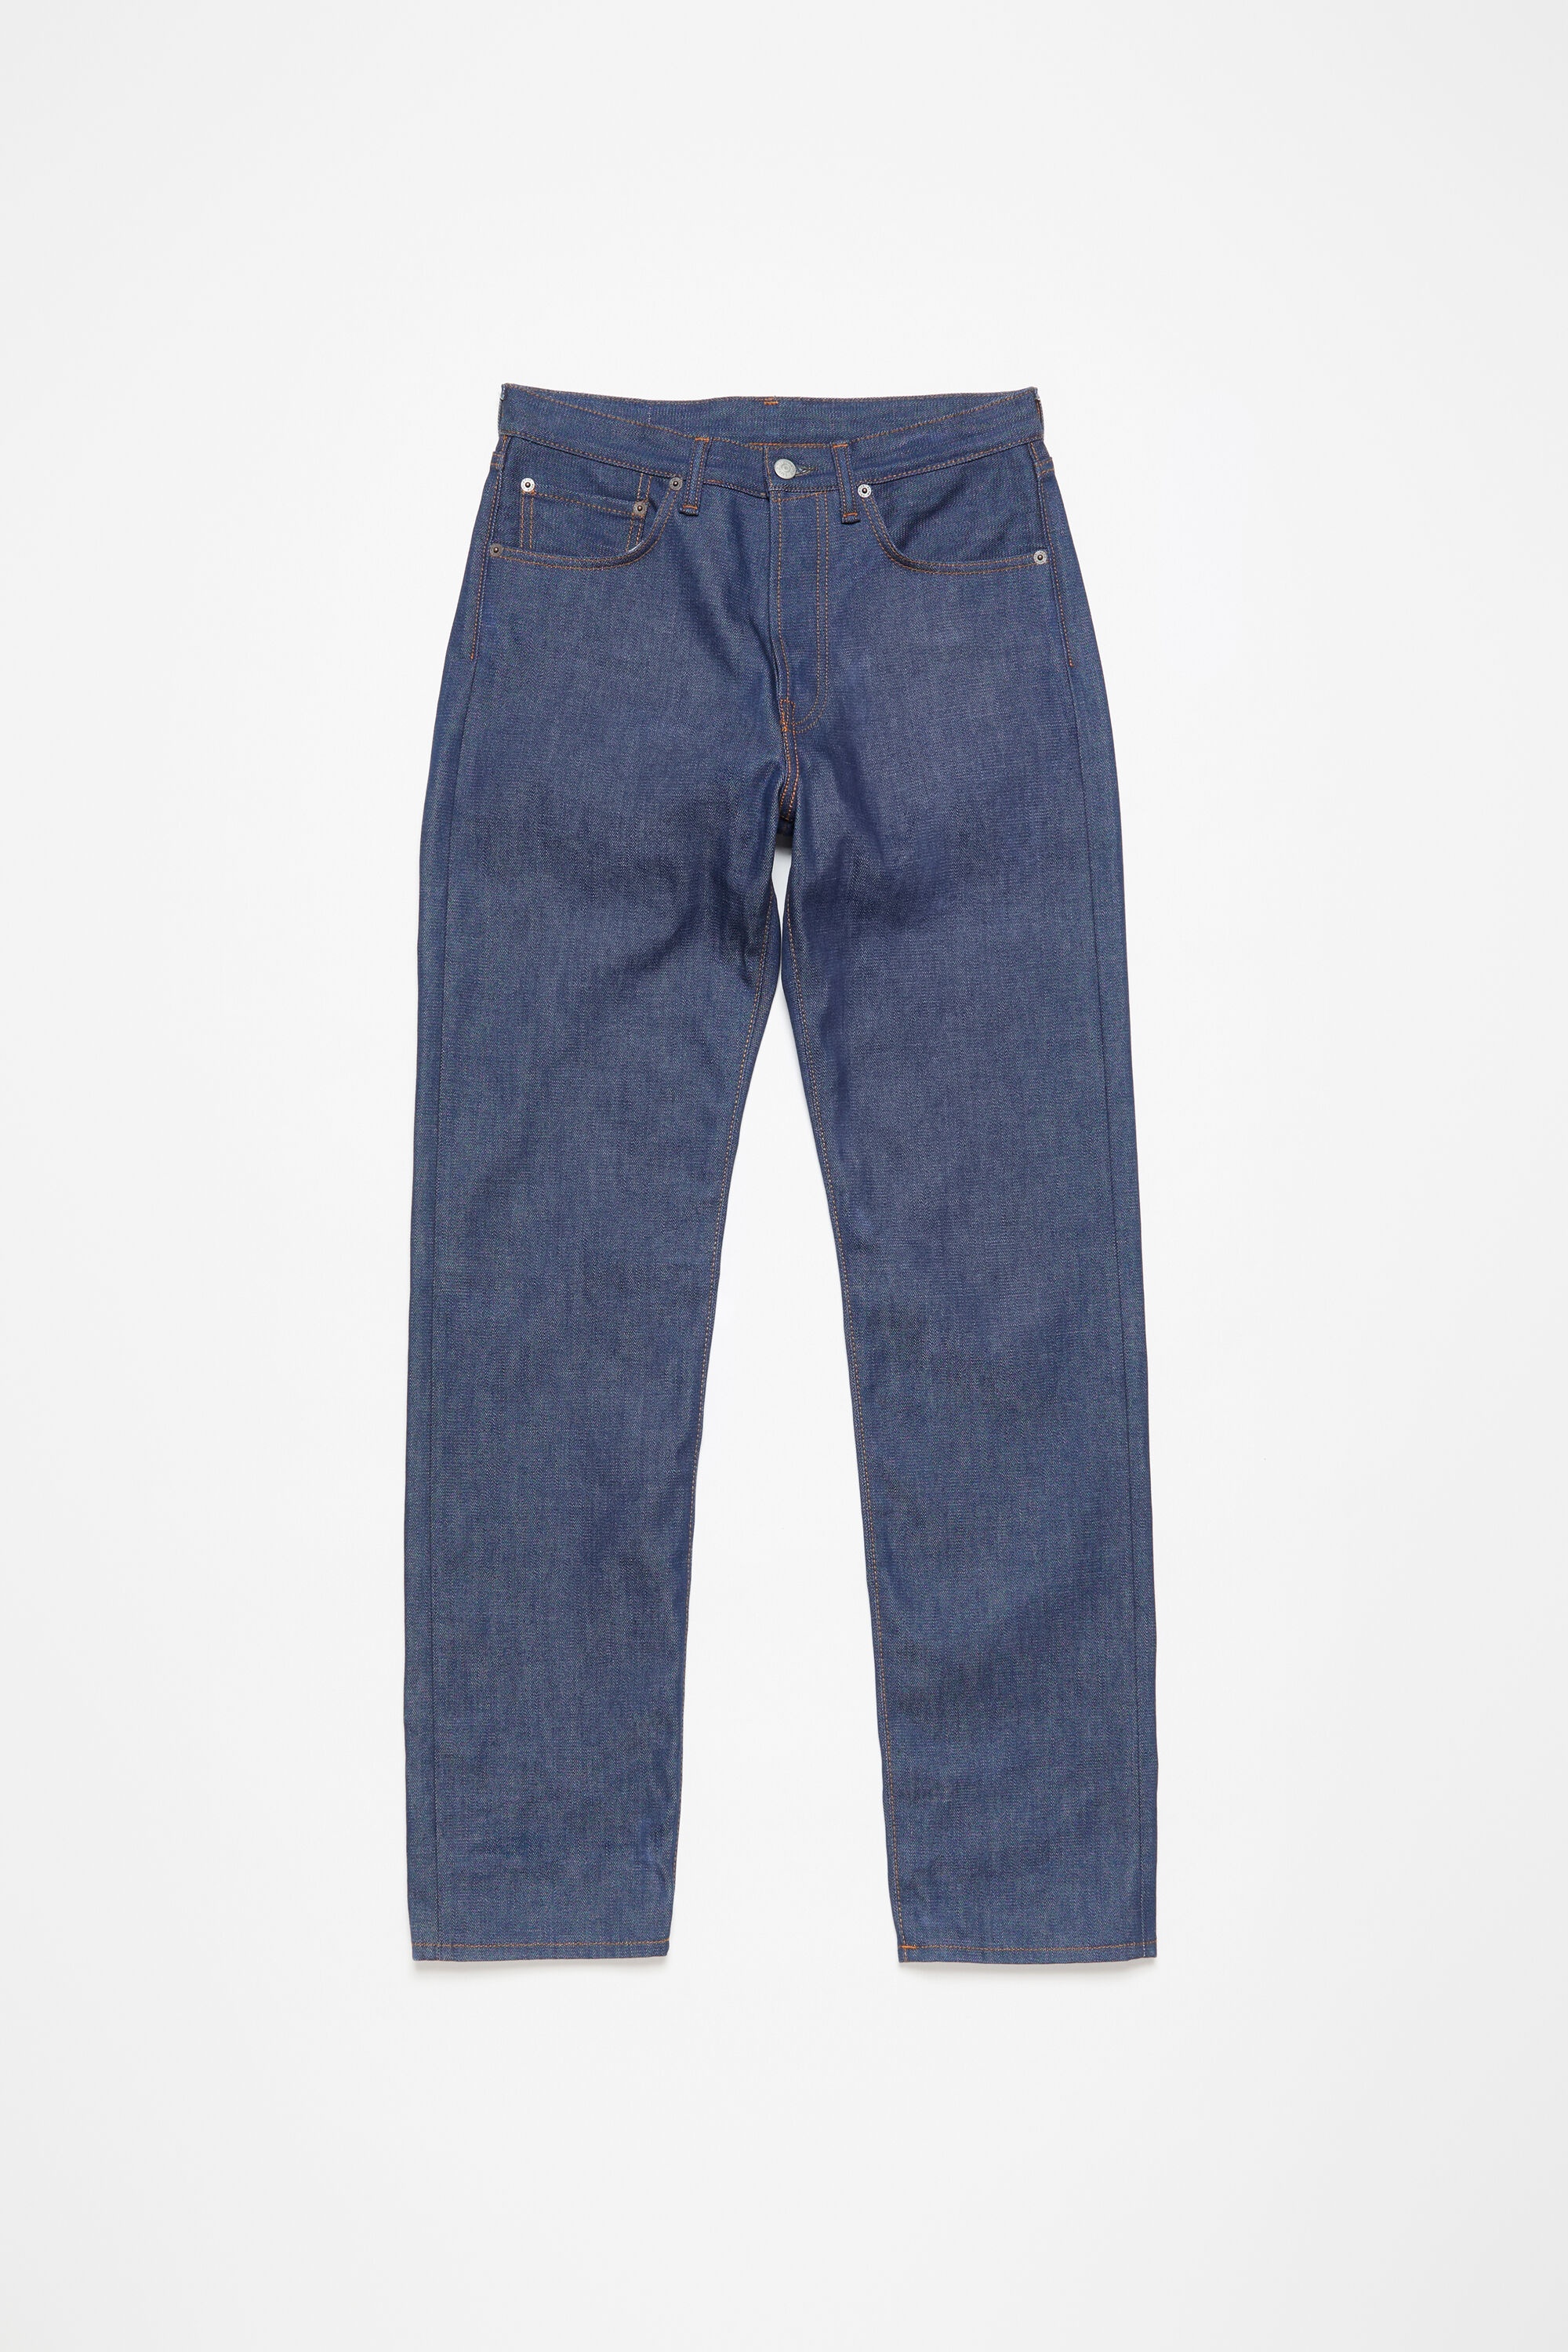 Regular fit jeans -1996 - Indigo blue - 7